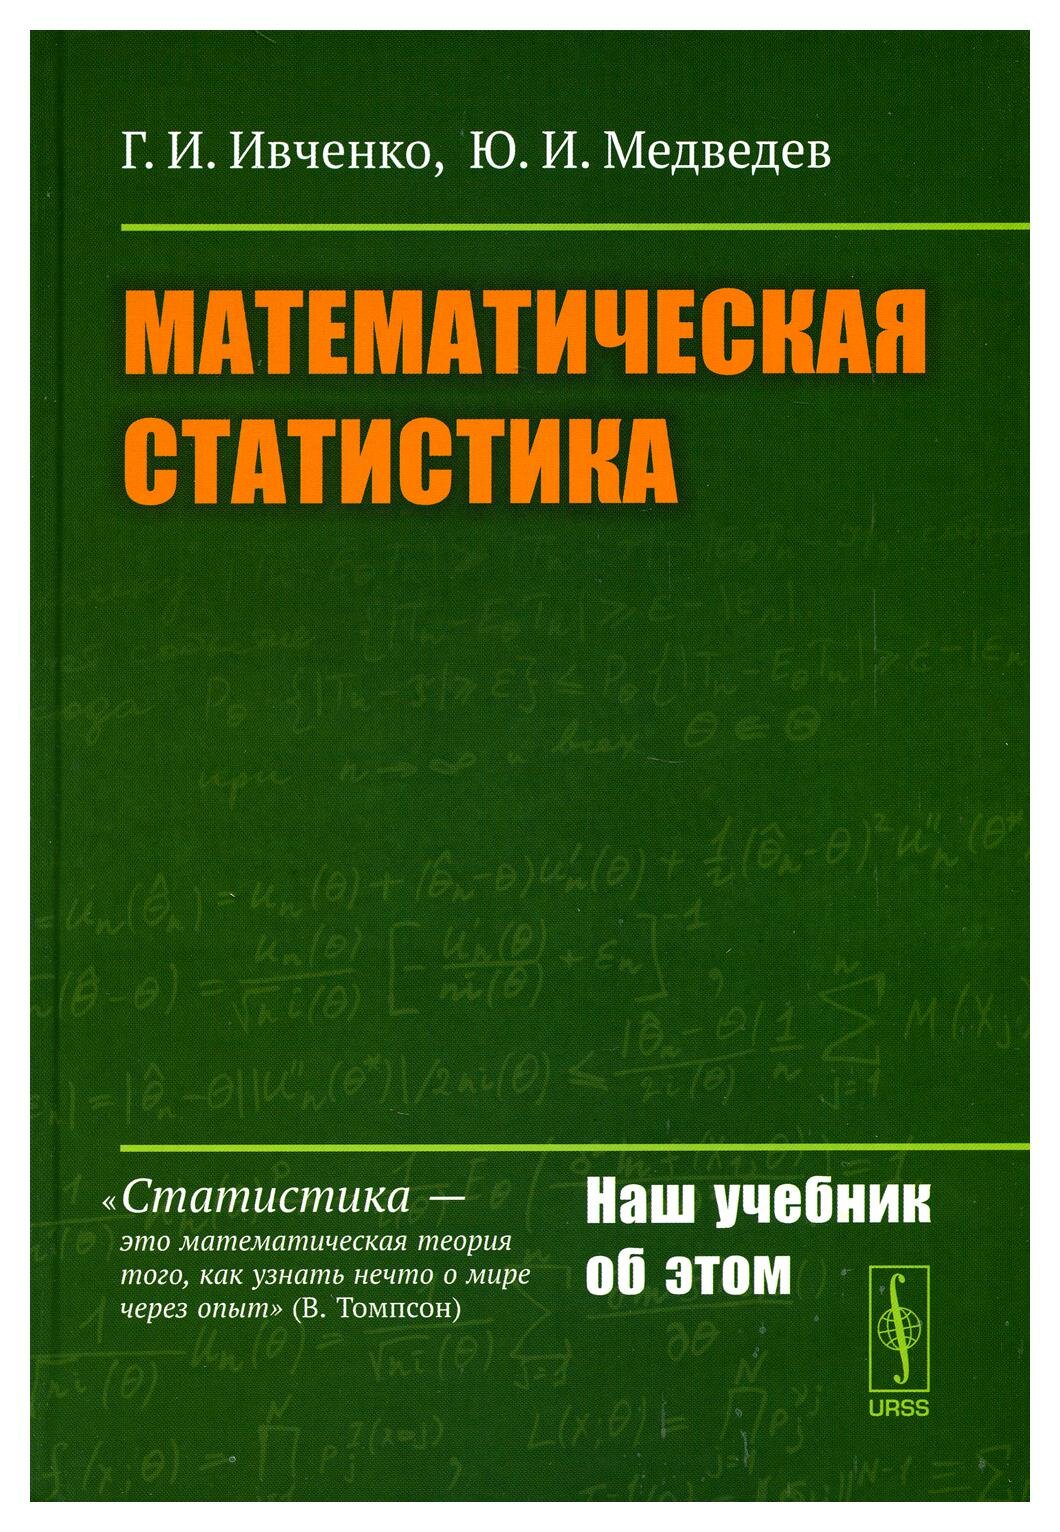 Математическая статистика: учебник. Изд. стер. Ивченко Г. И, Медведев Ю. И. ленанд